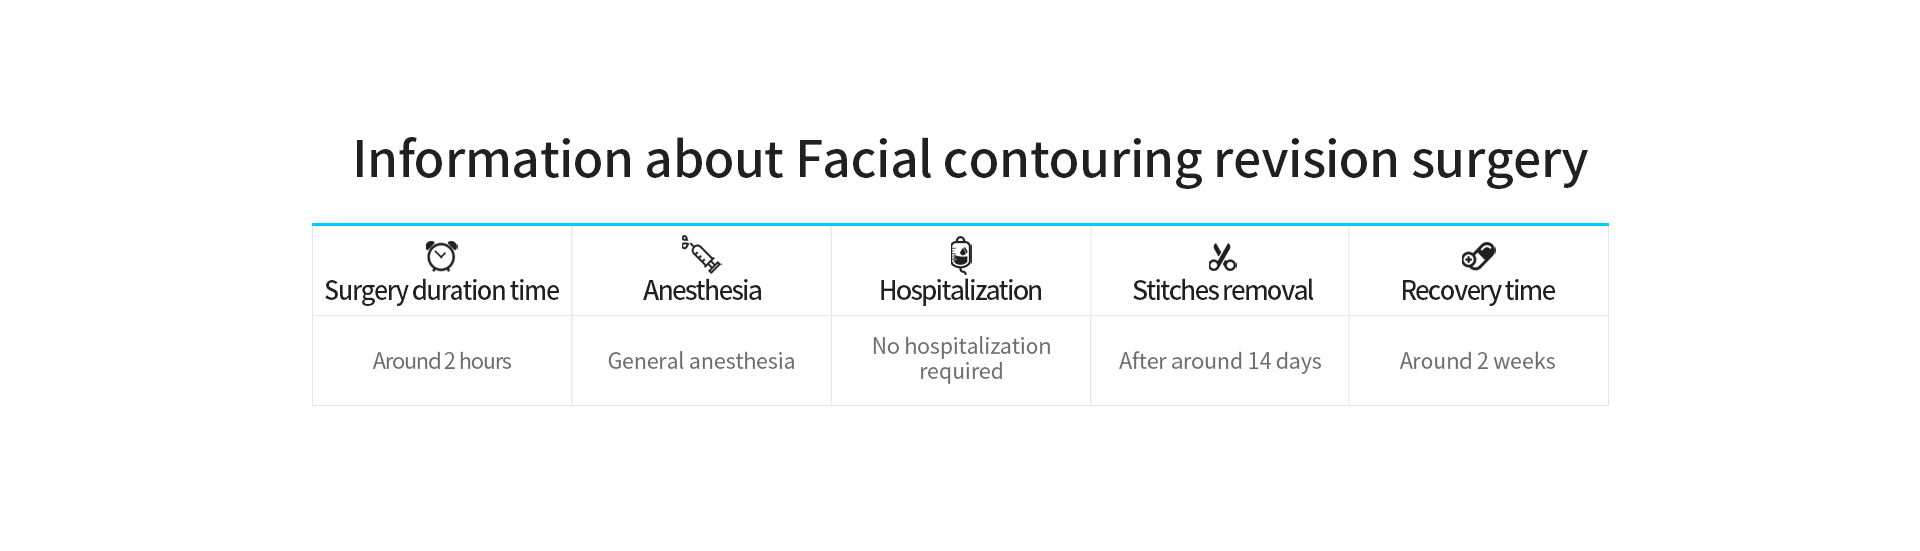 Facial contouring revision surgery img